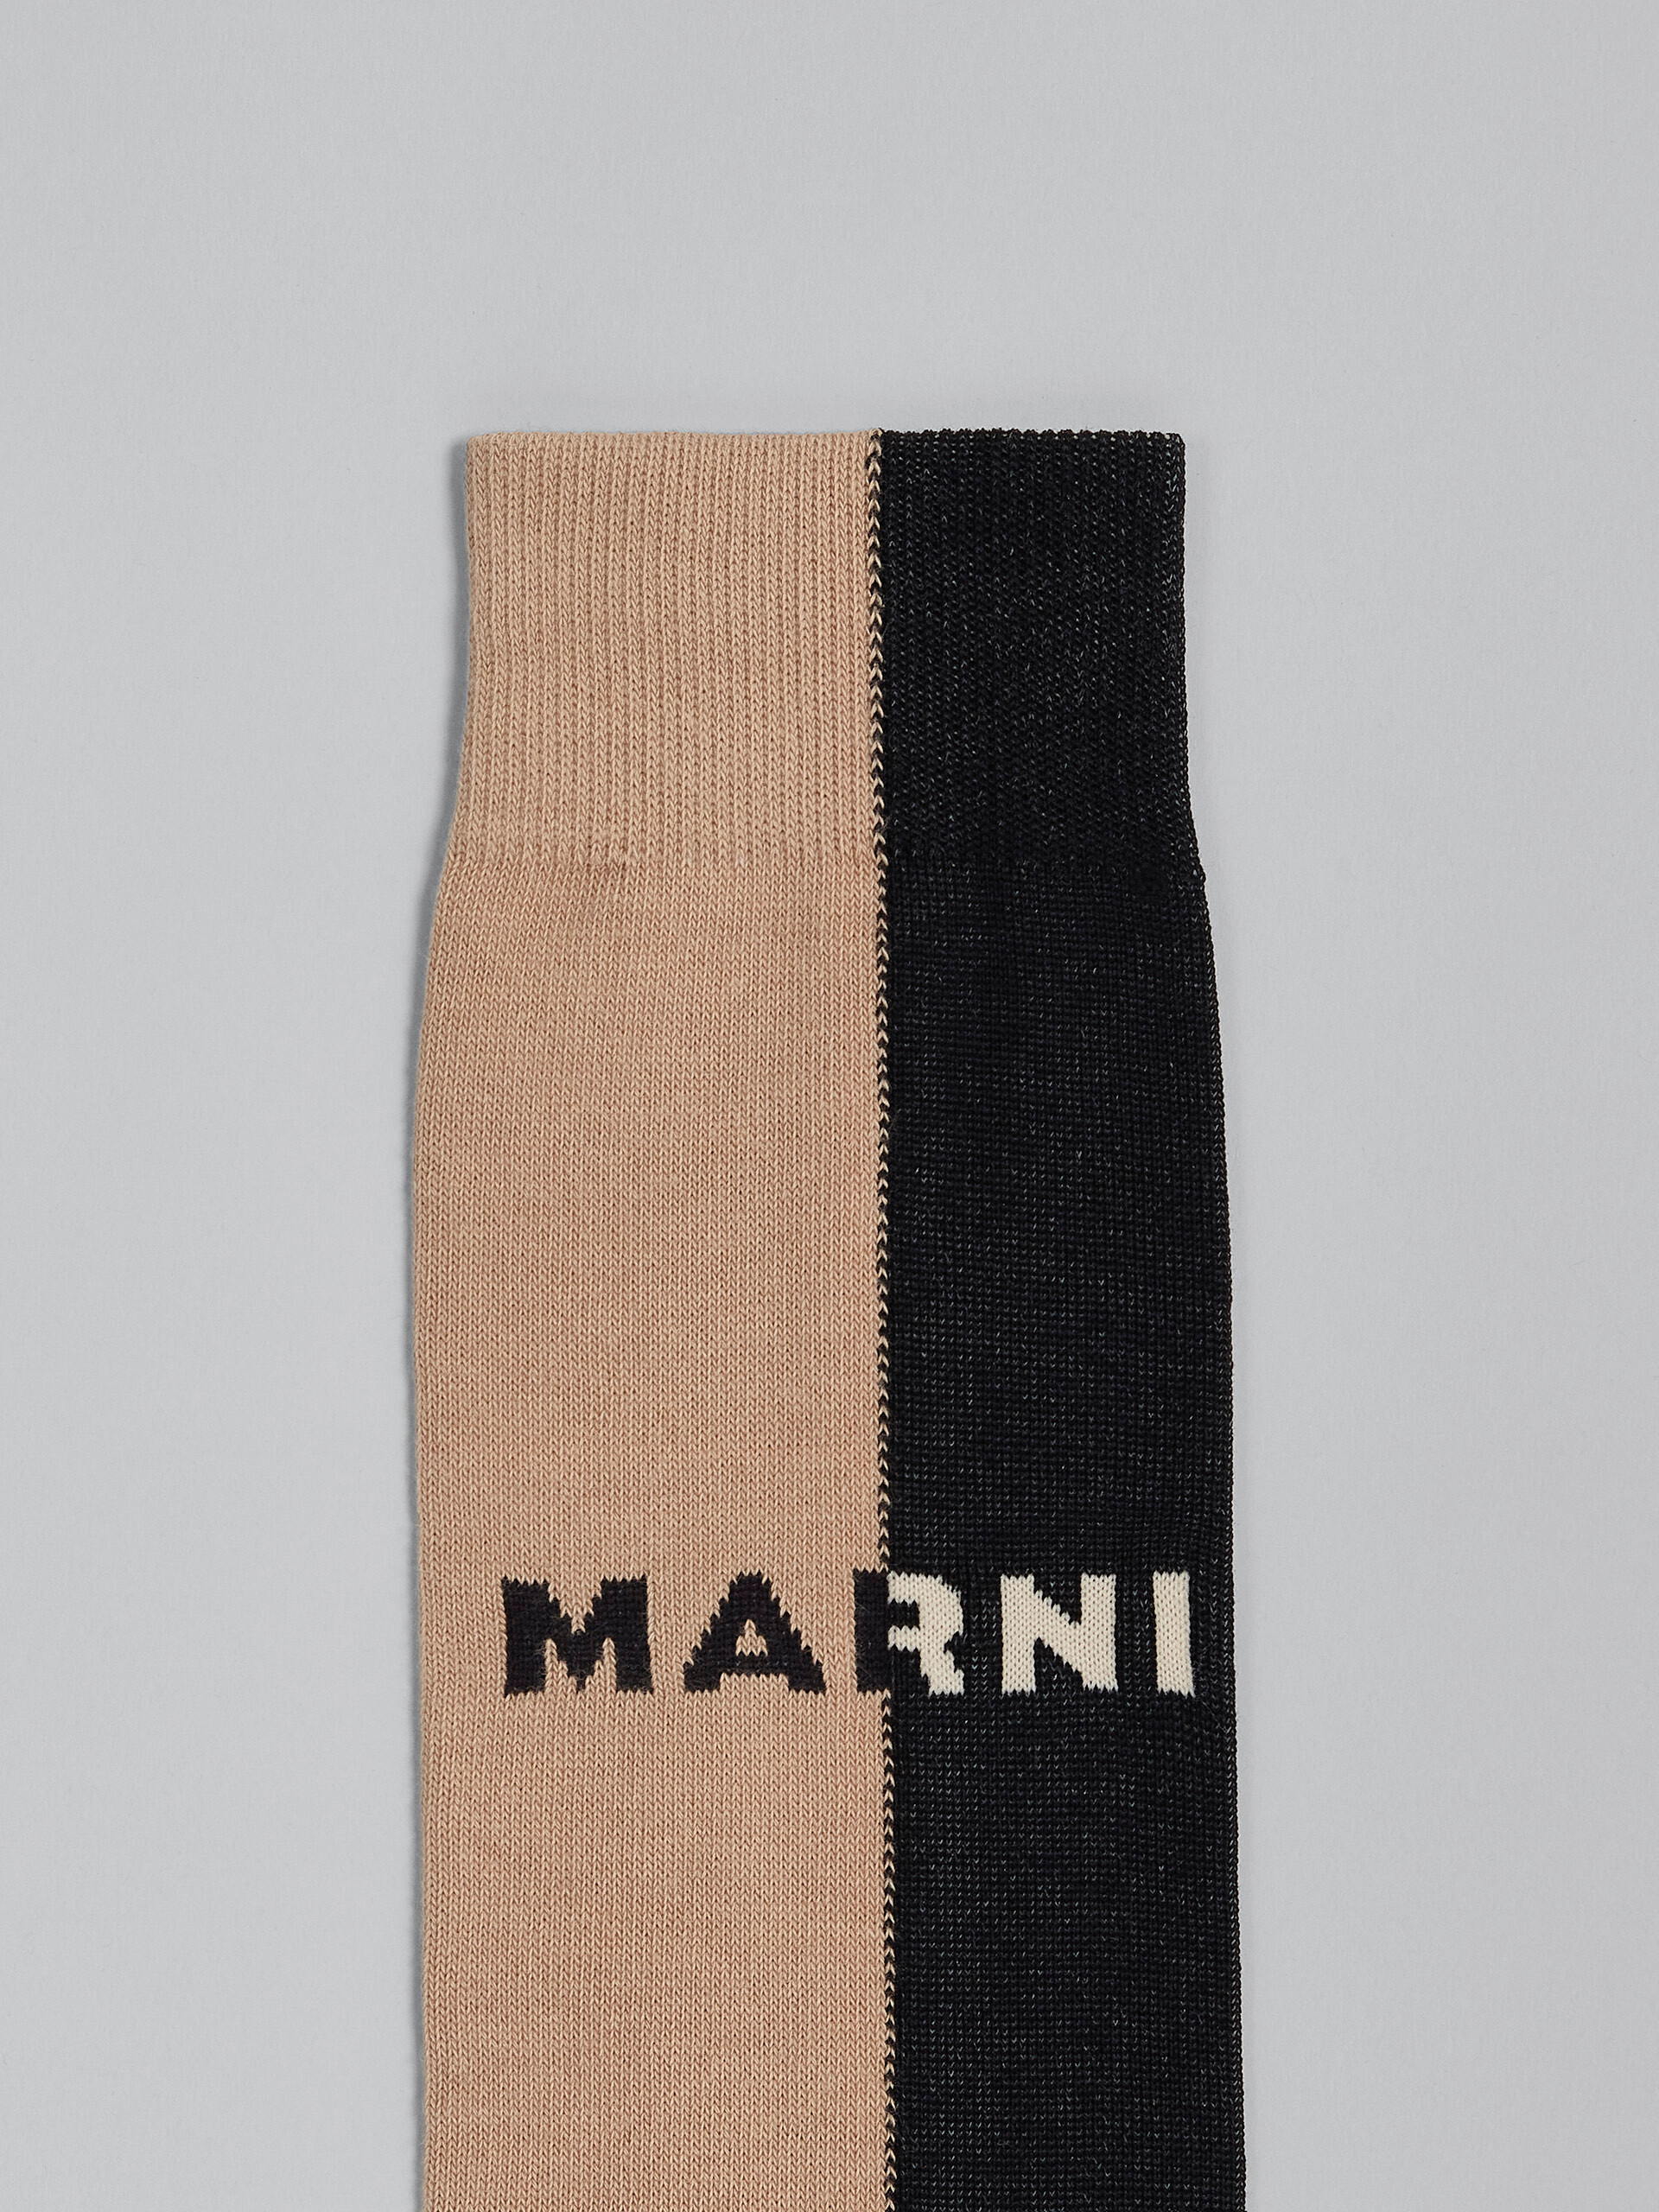 Black bi-coloured cotton and nylon socks - Socks - Image 3